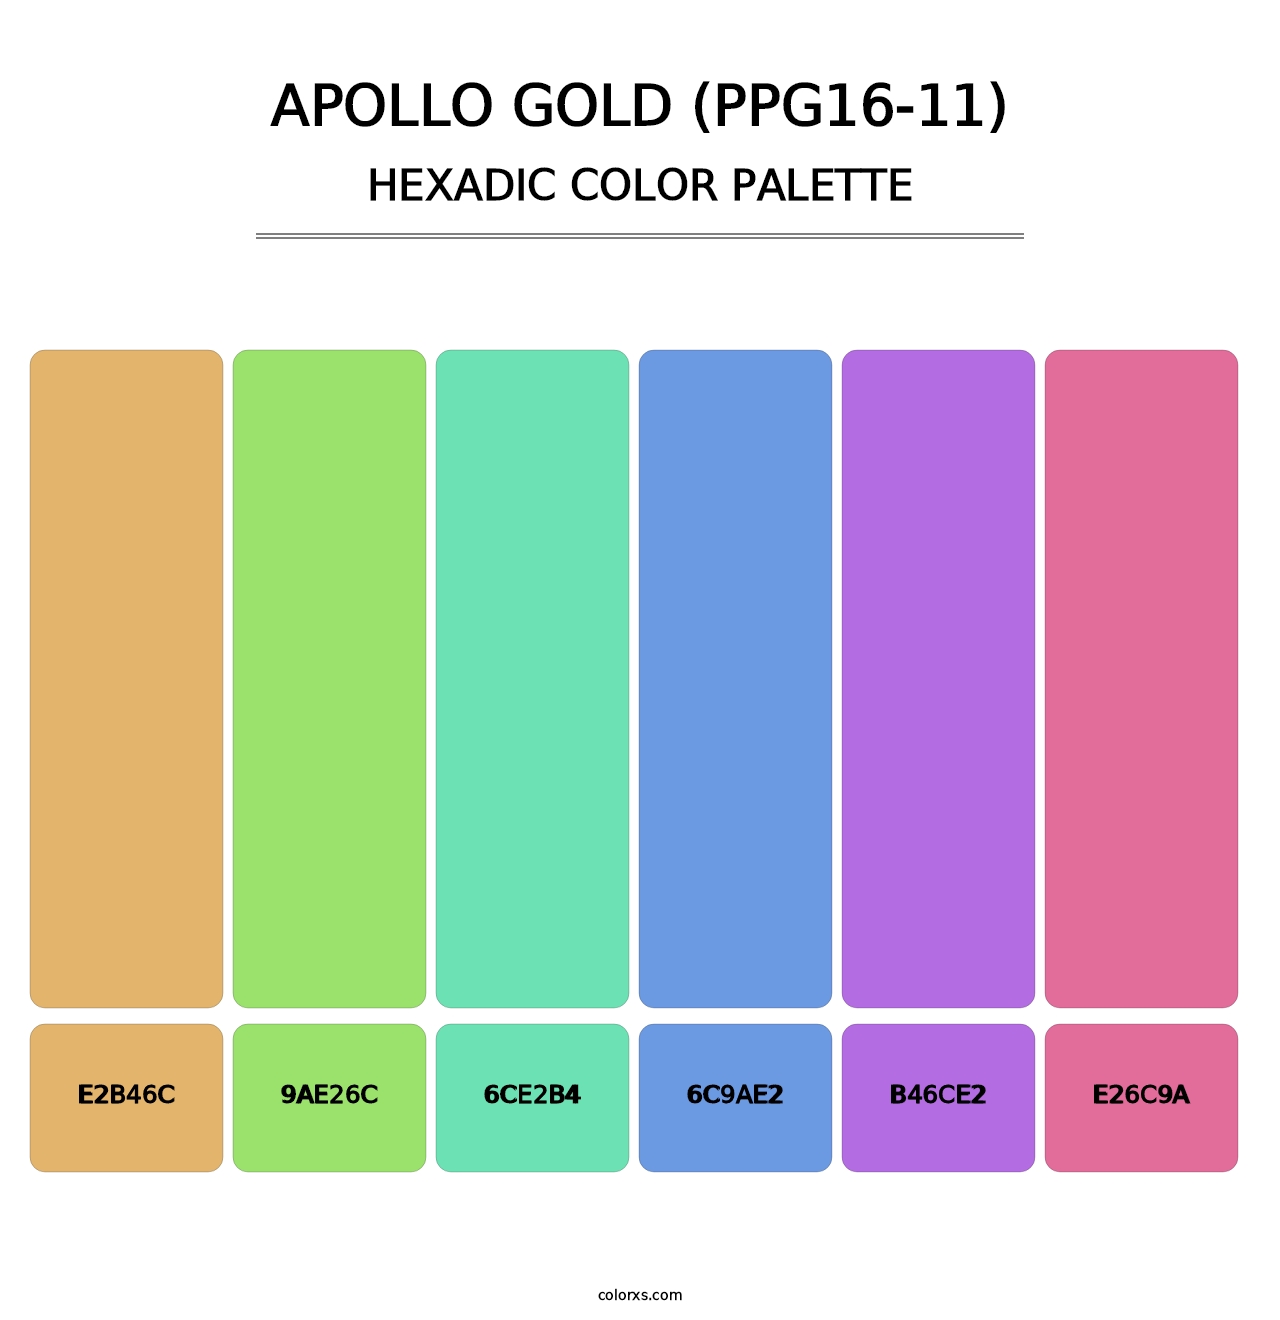 Apollo Gold (PPG16-11) - Hexadic Color Palette